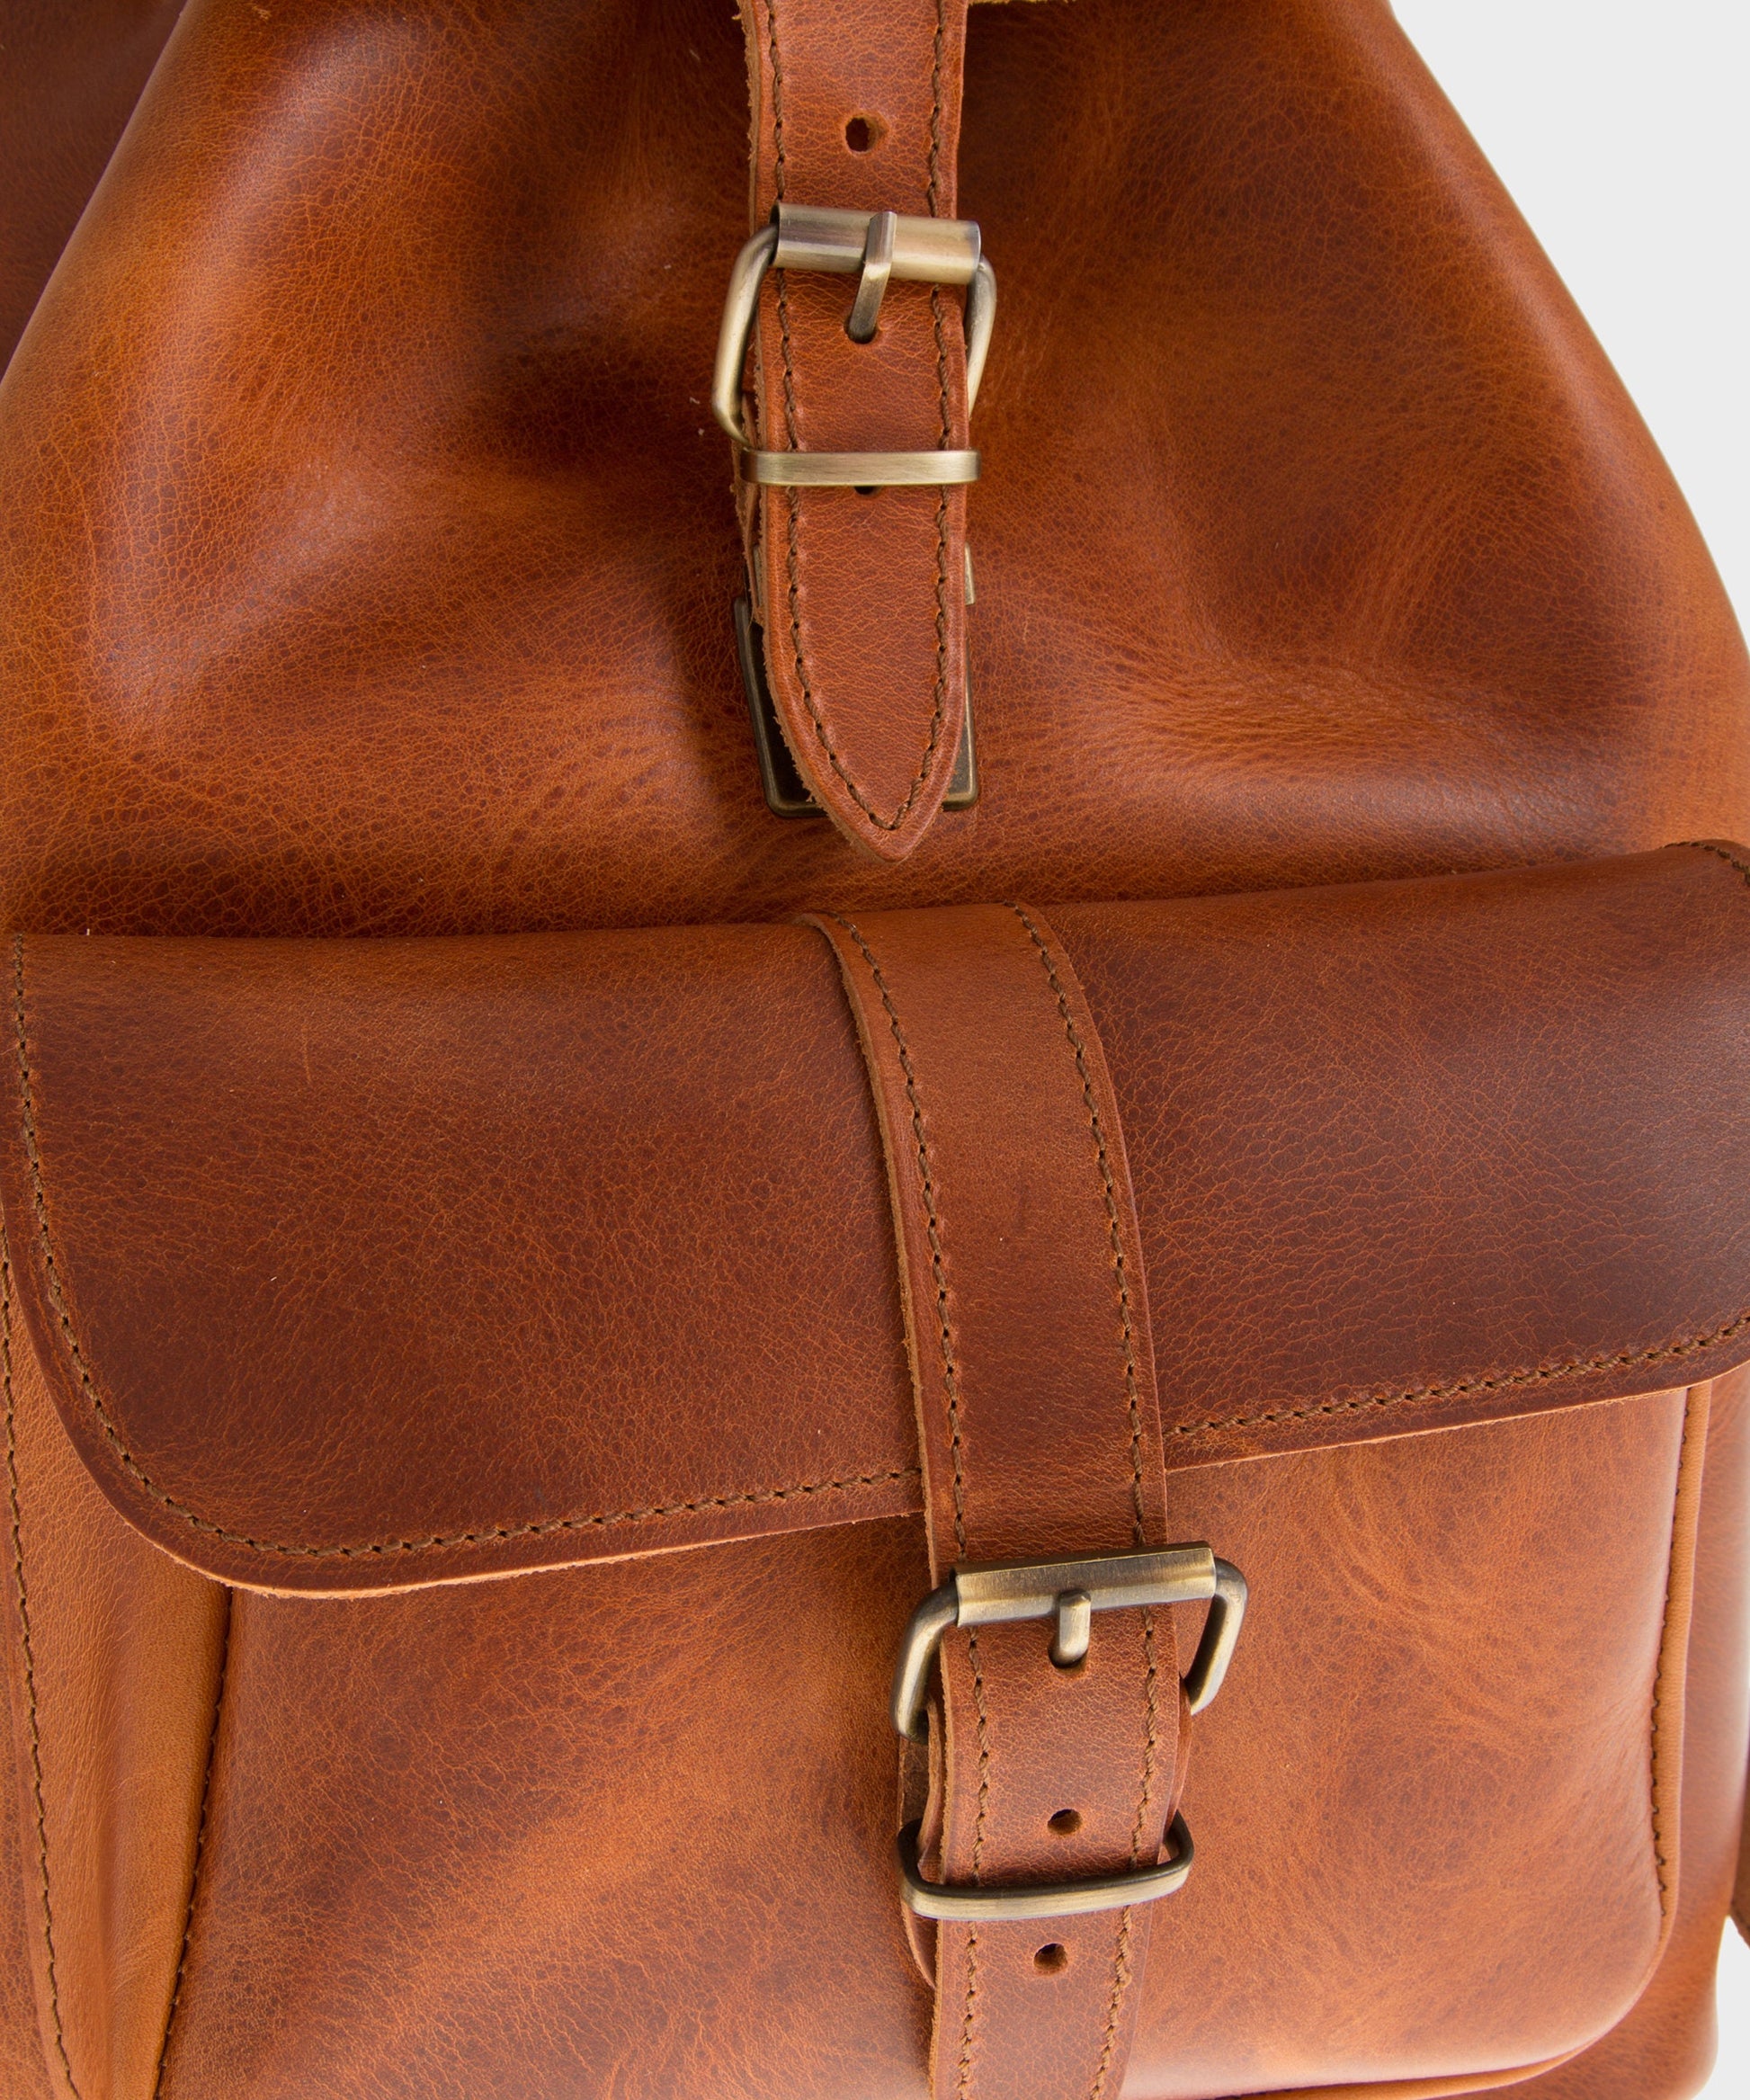 Men's full grain boho leather backpack, Minimalist leather satchel backpack, Large leather travel backpack,